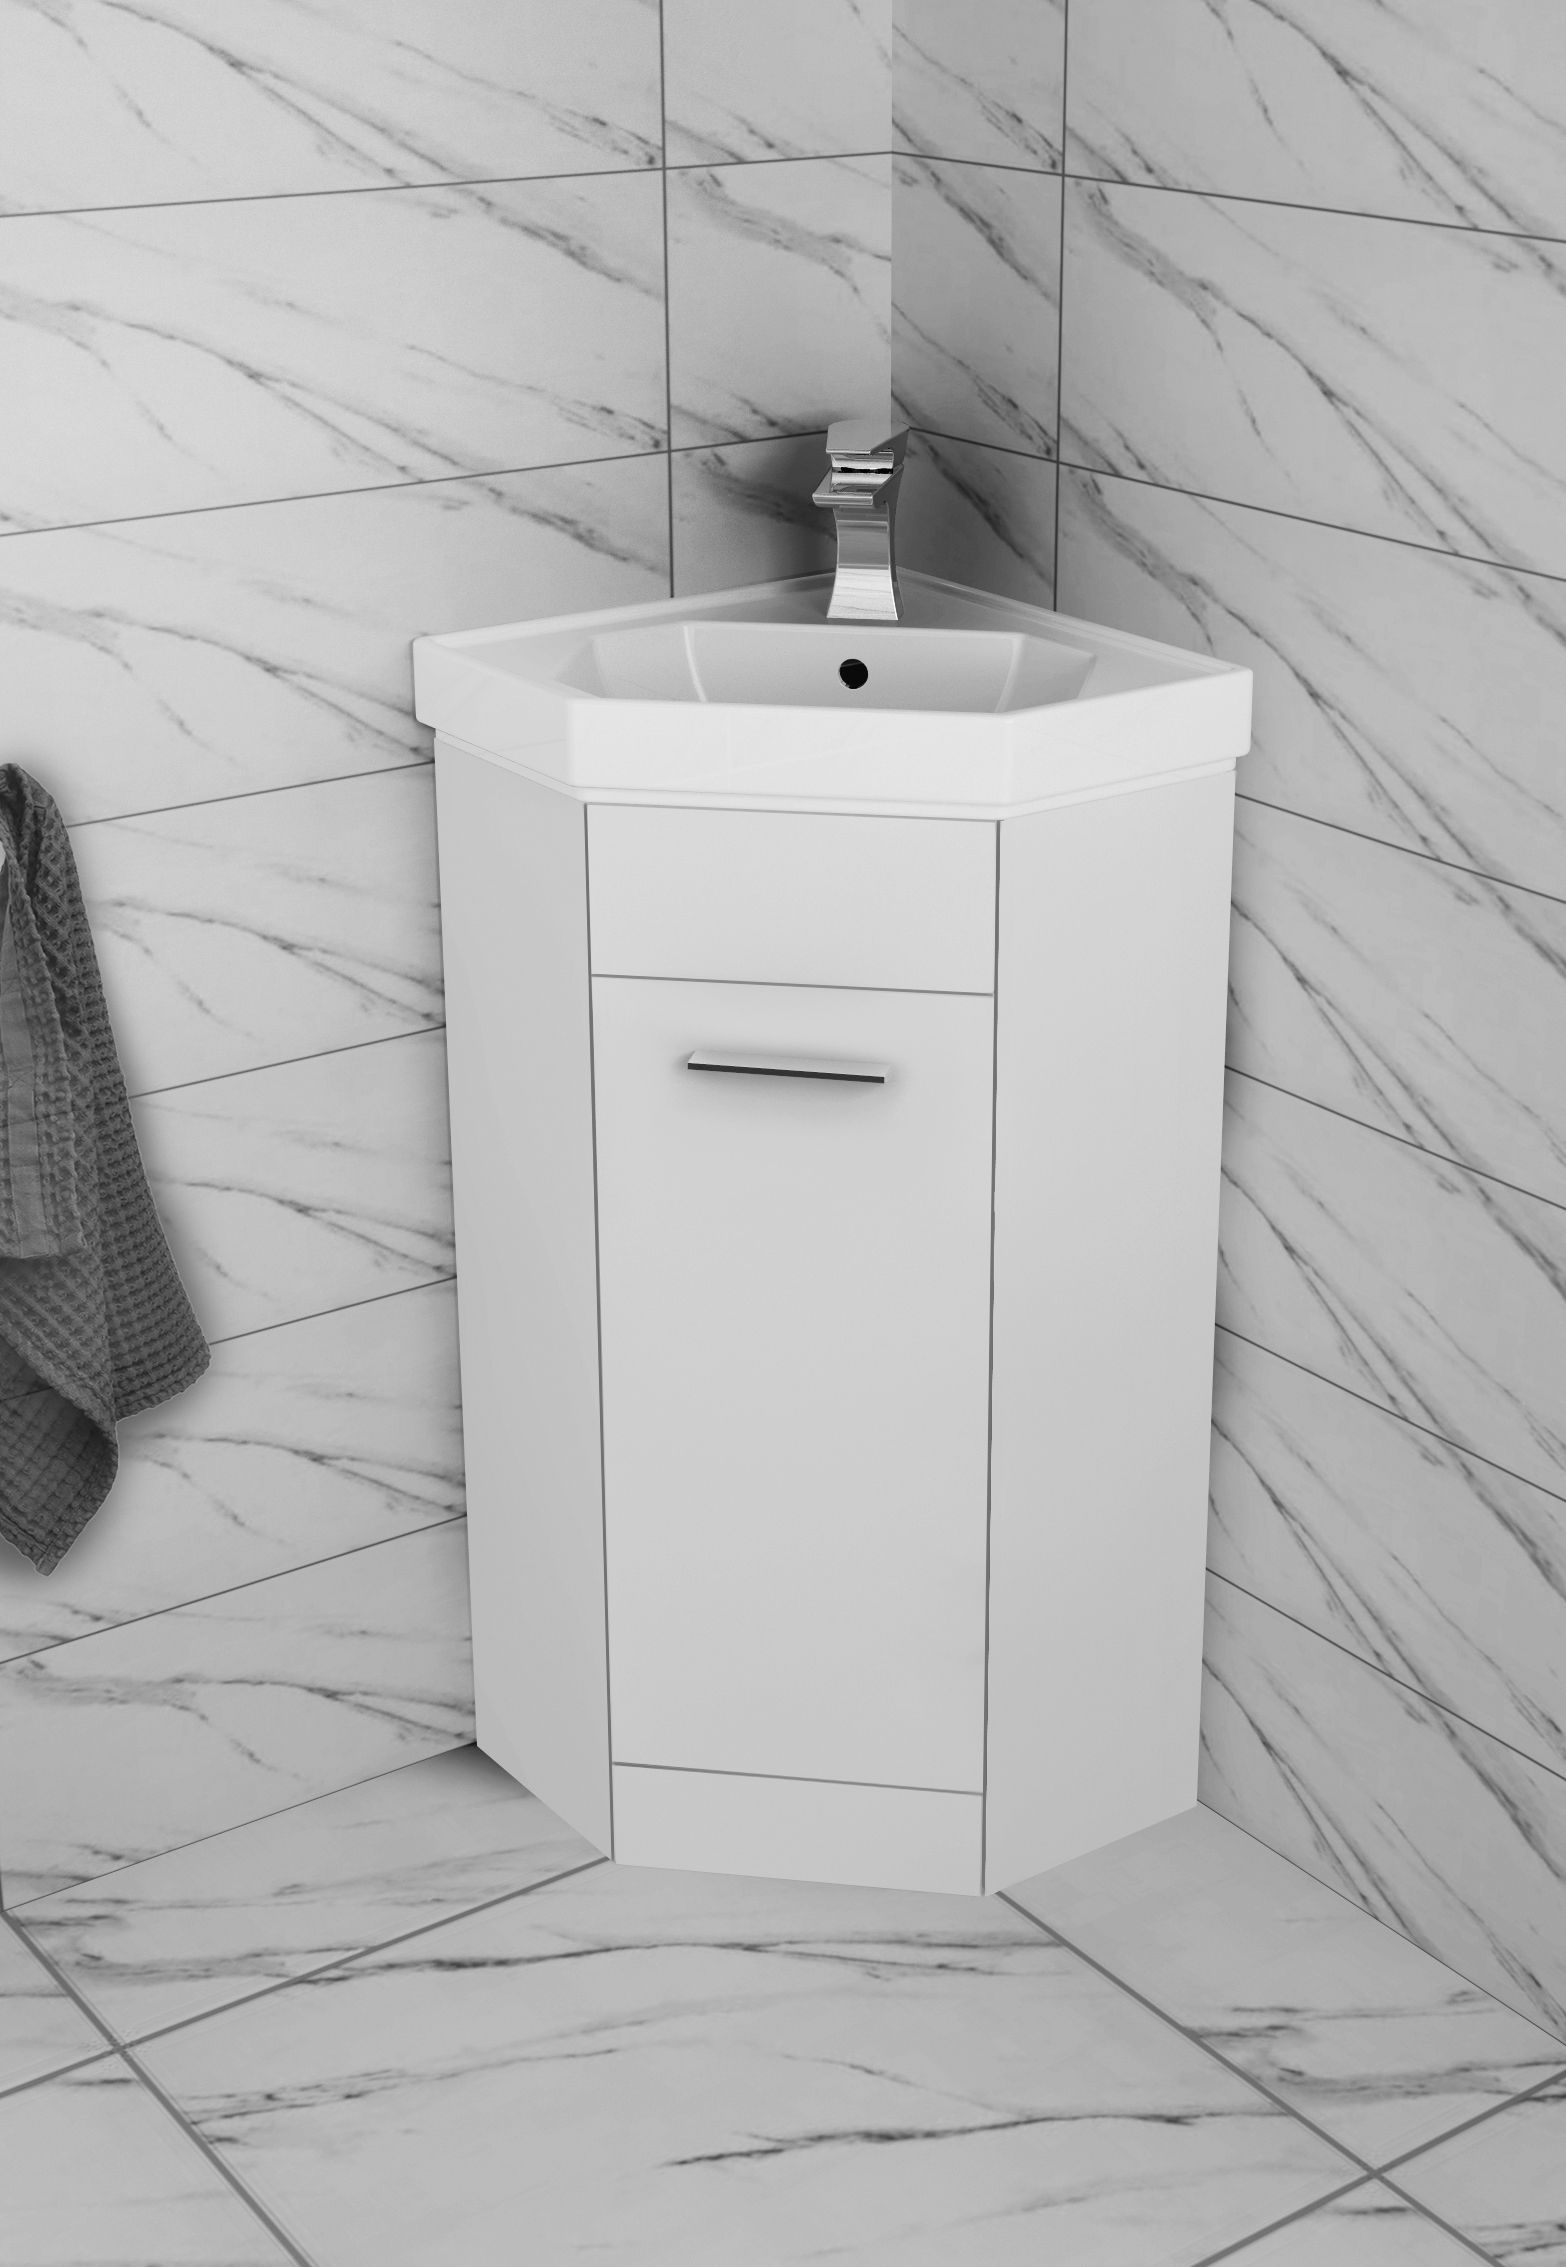 Wickes Porto White Gloss Corner Freestanding Vanity Unit with Basin - 840 x 420mm